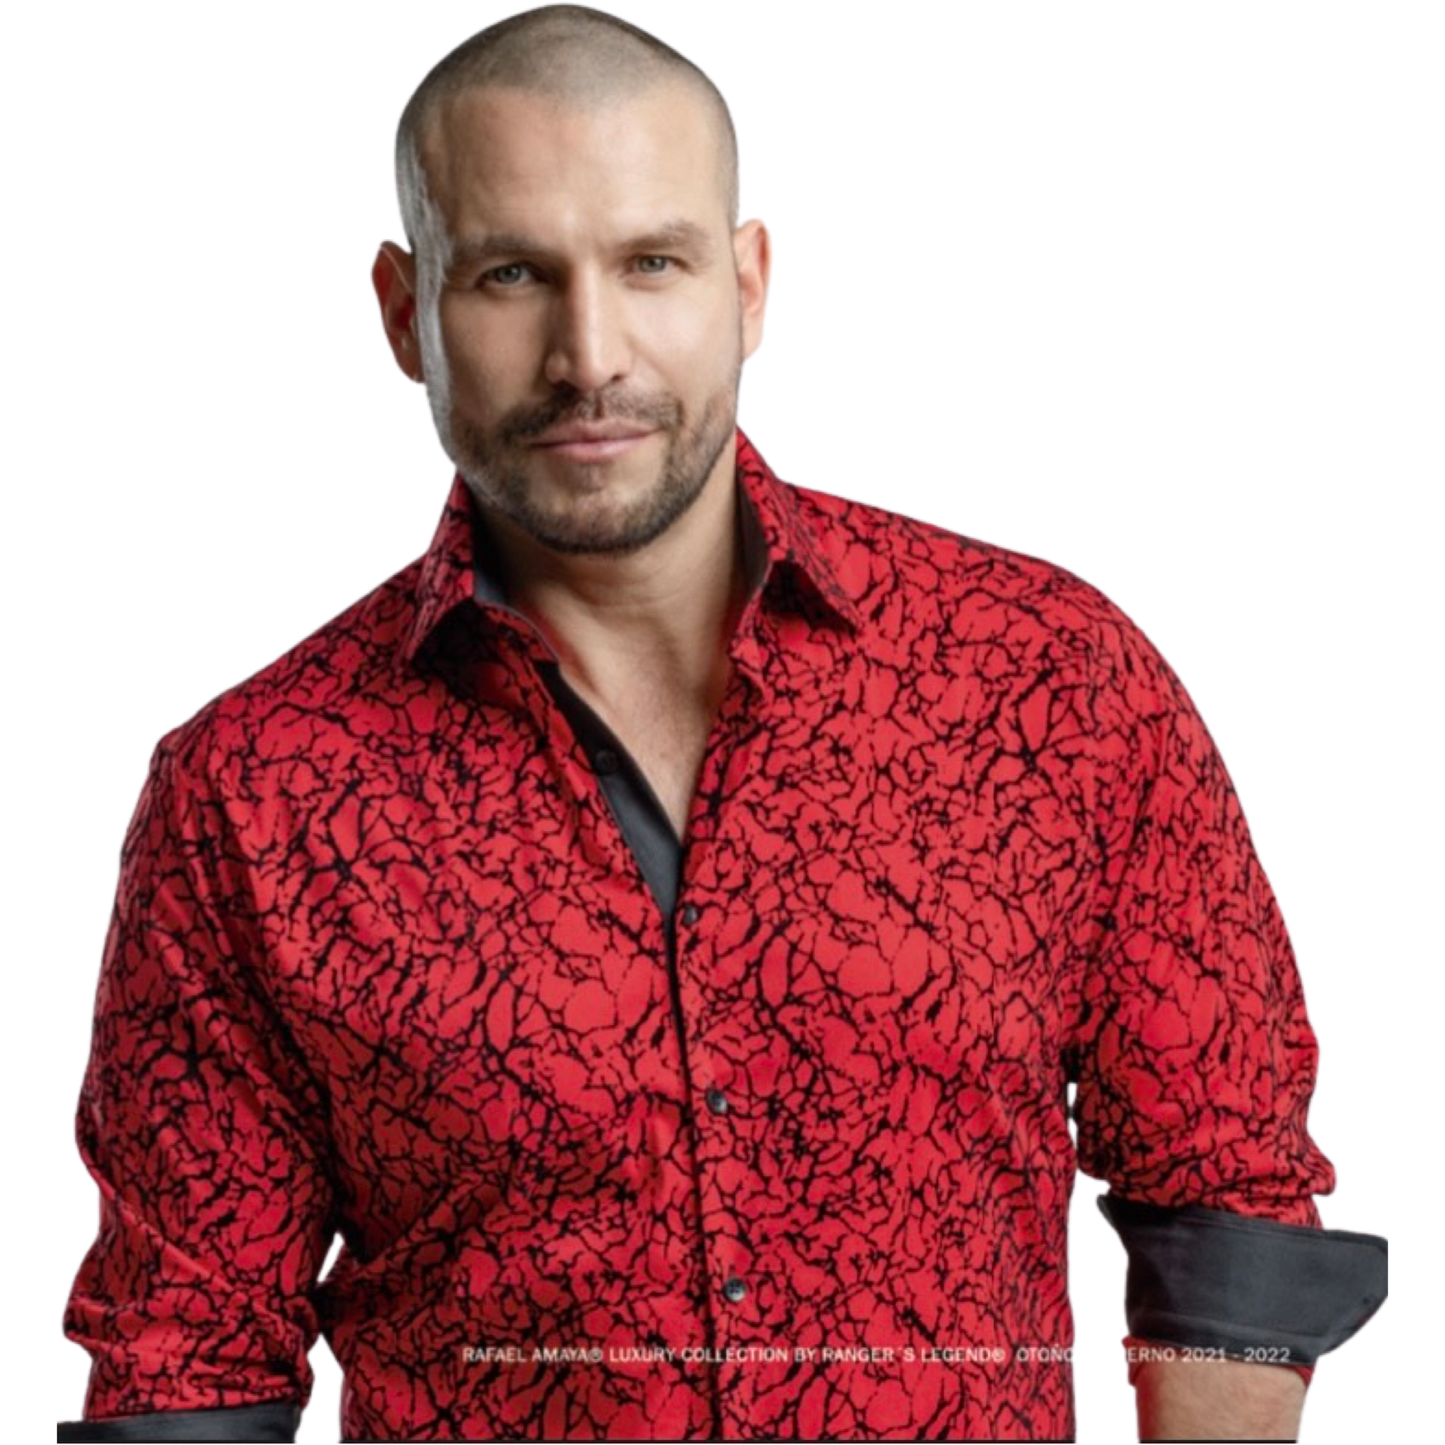 Ranger's Rafael Amaya Luxury Collection Fitted Shirt